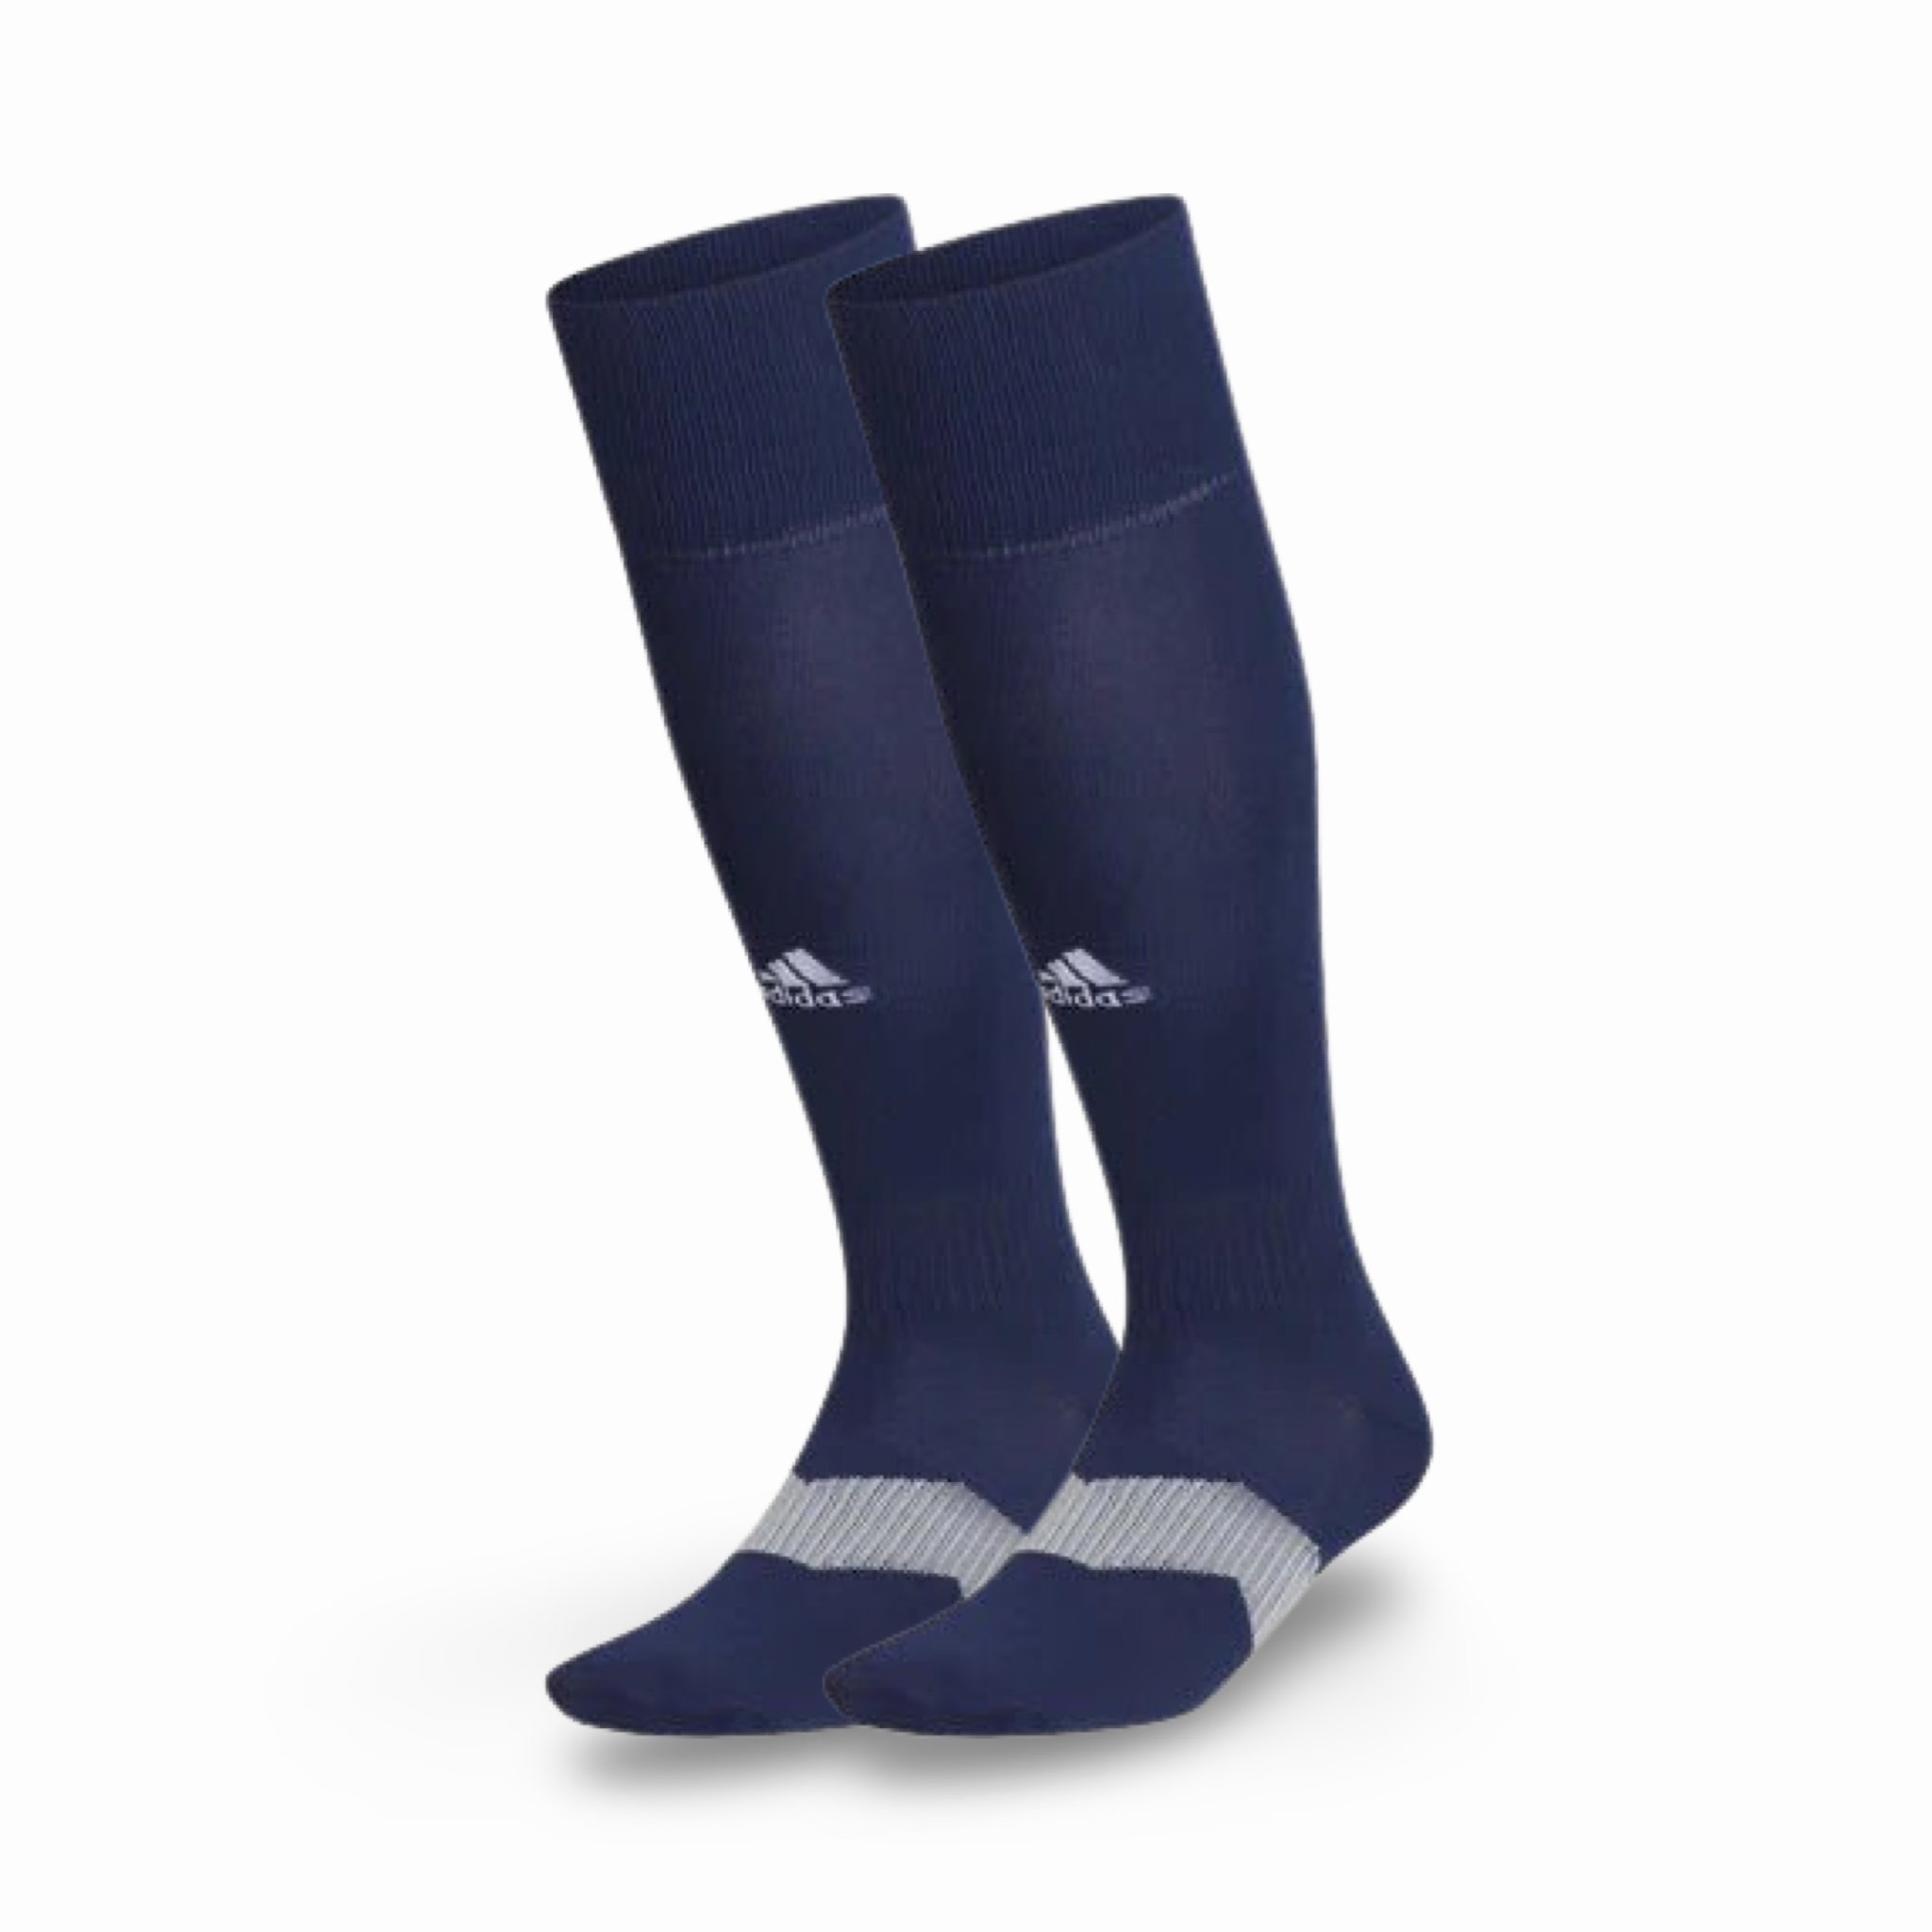 Adidas Metro V OTC Football Socks - Football Socks